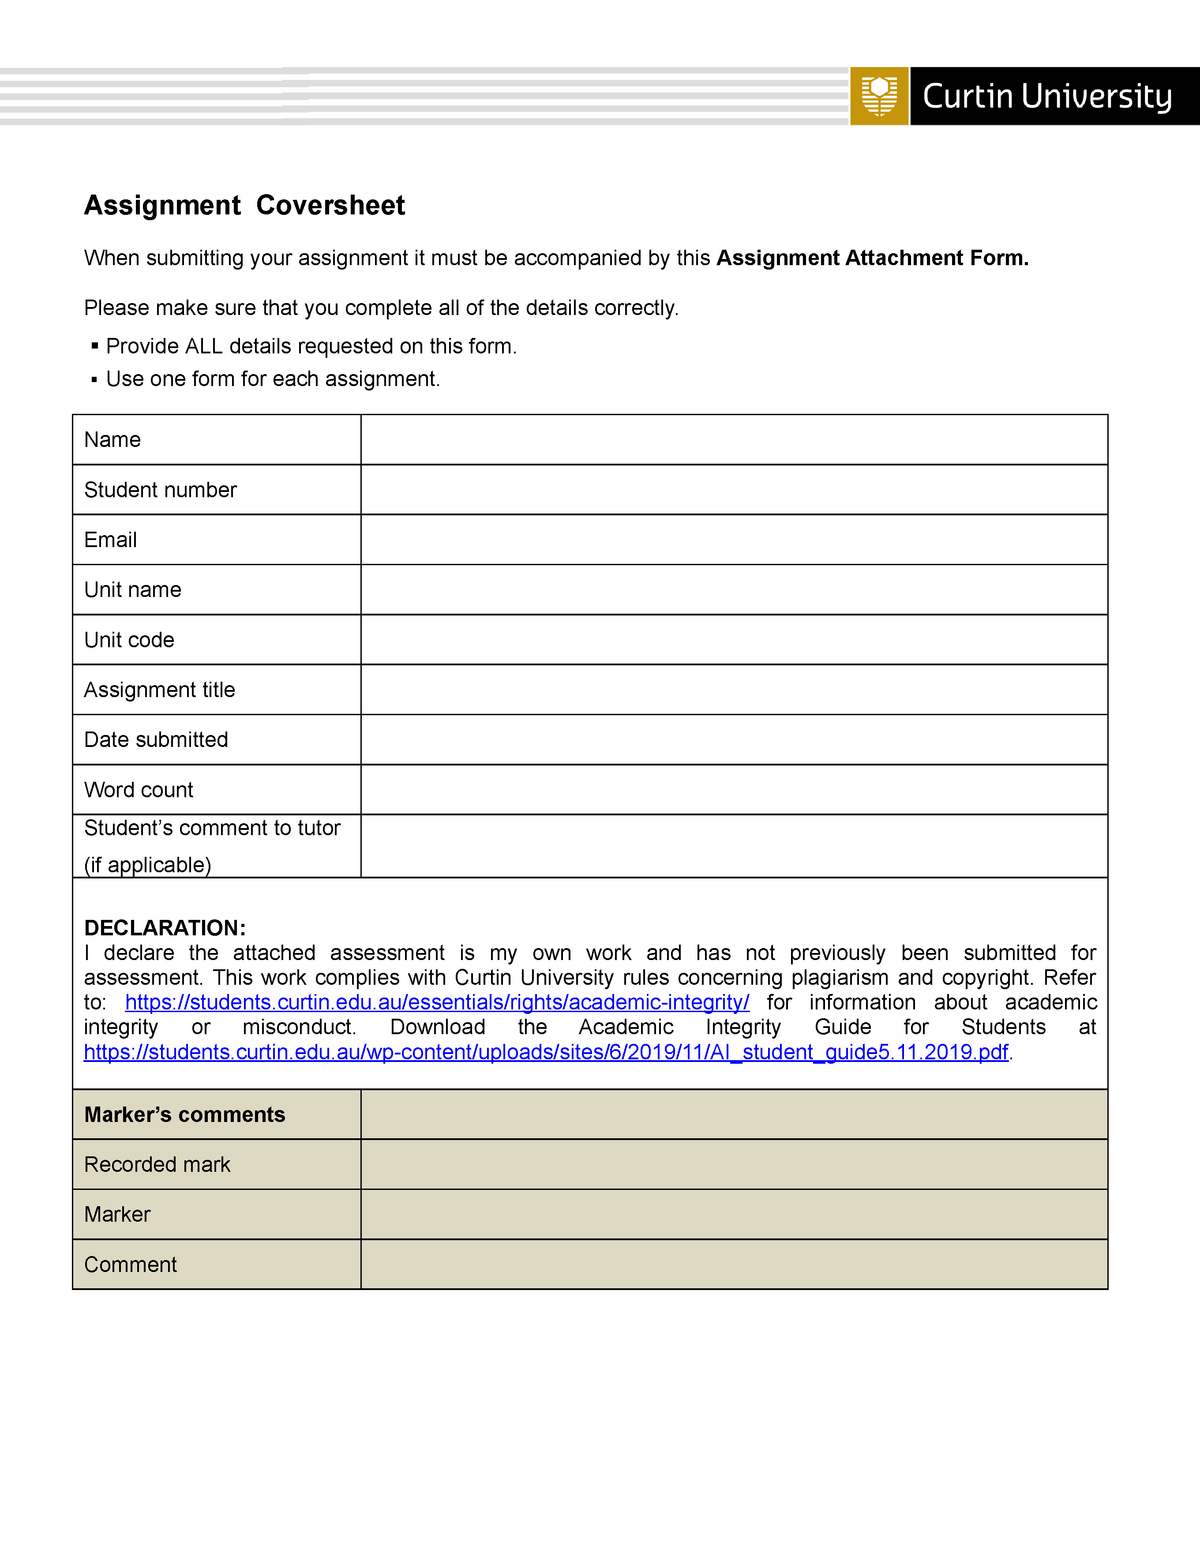 ukzn assignment cover sheet